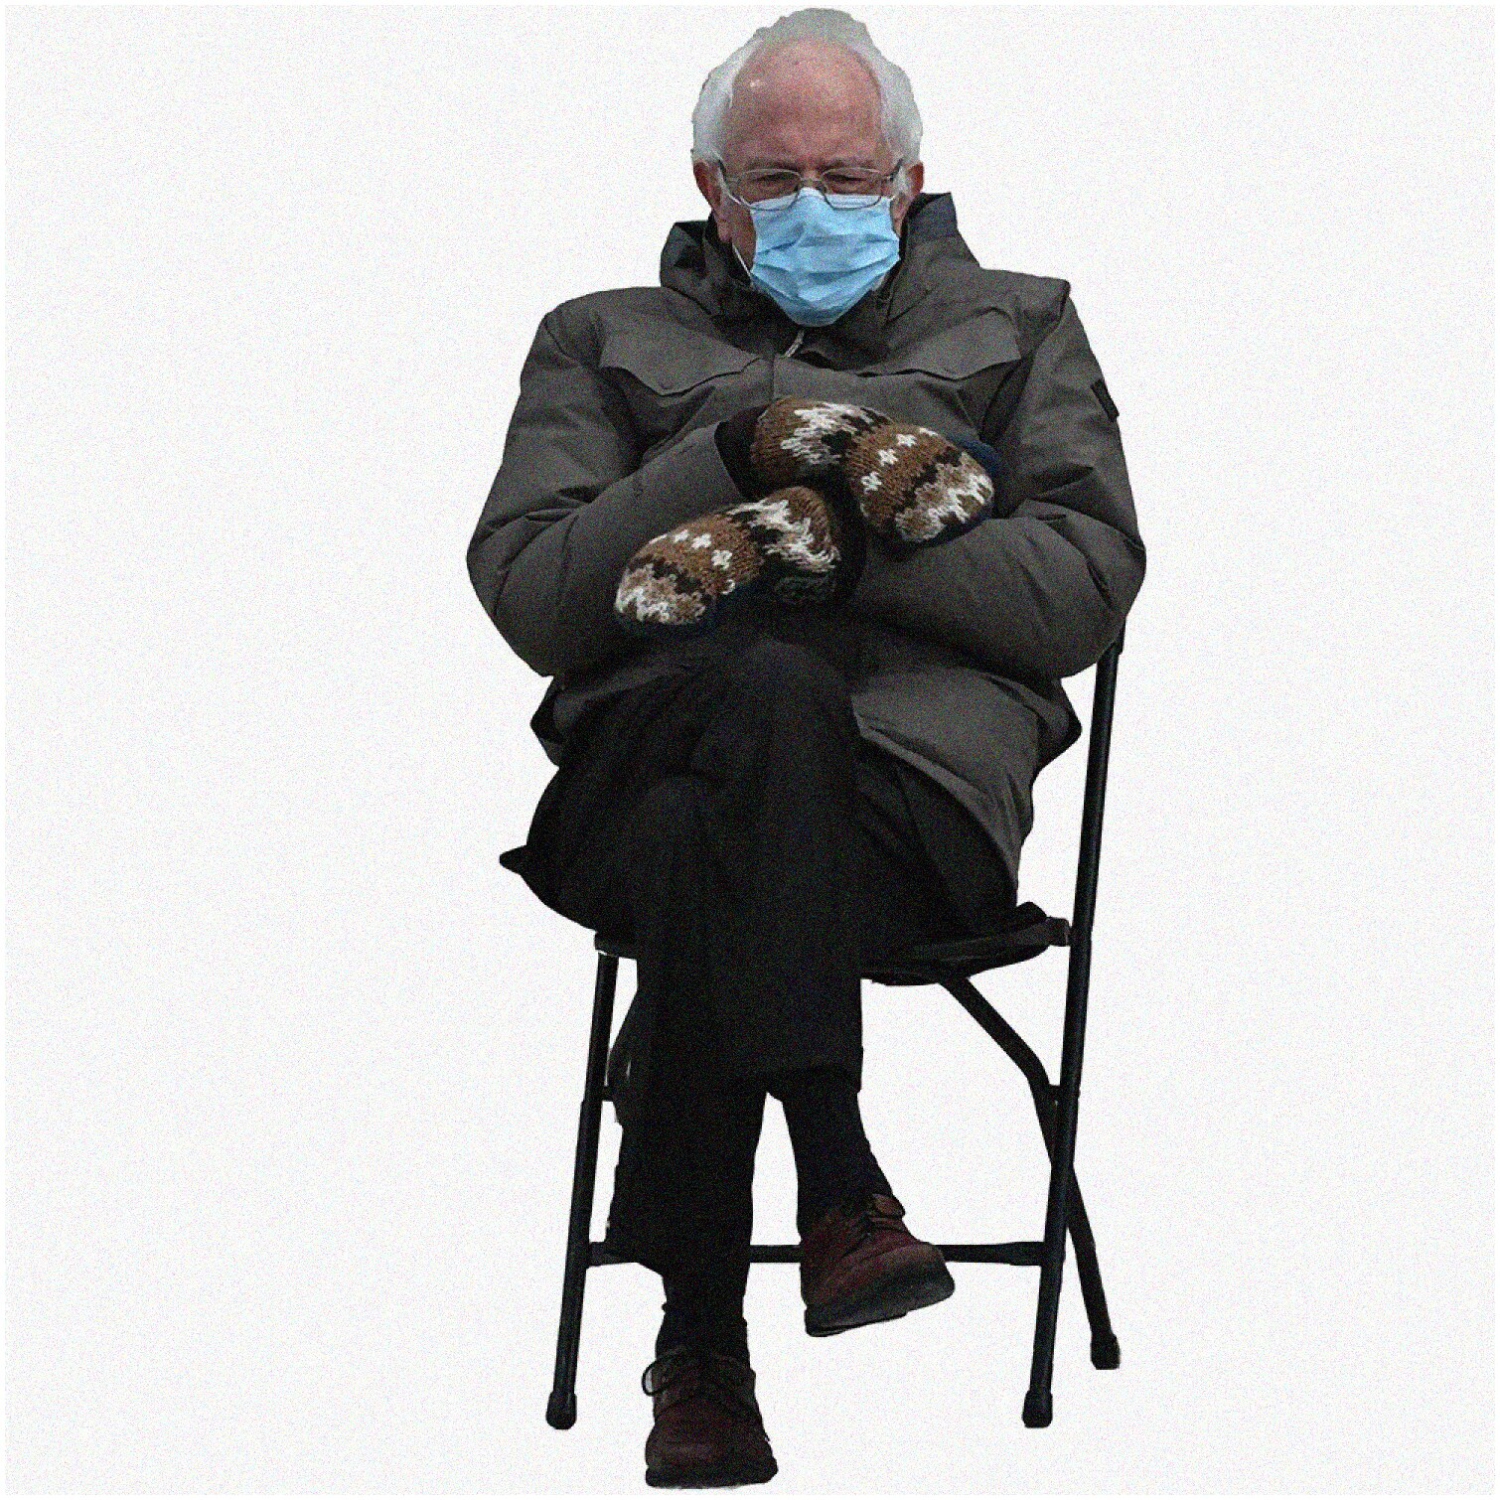 Mittens of the Revolution: Bernie Sanders Meme 55" Cardboard Cutout